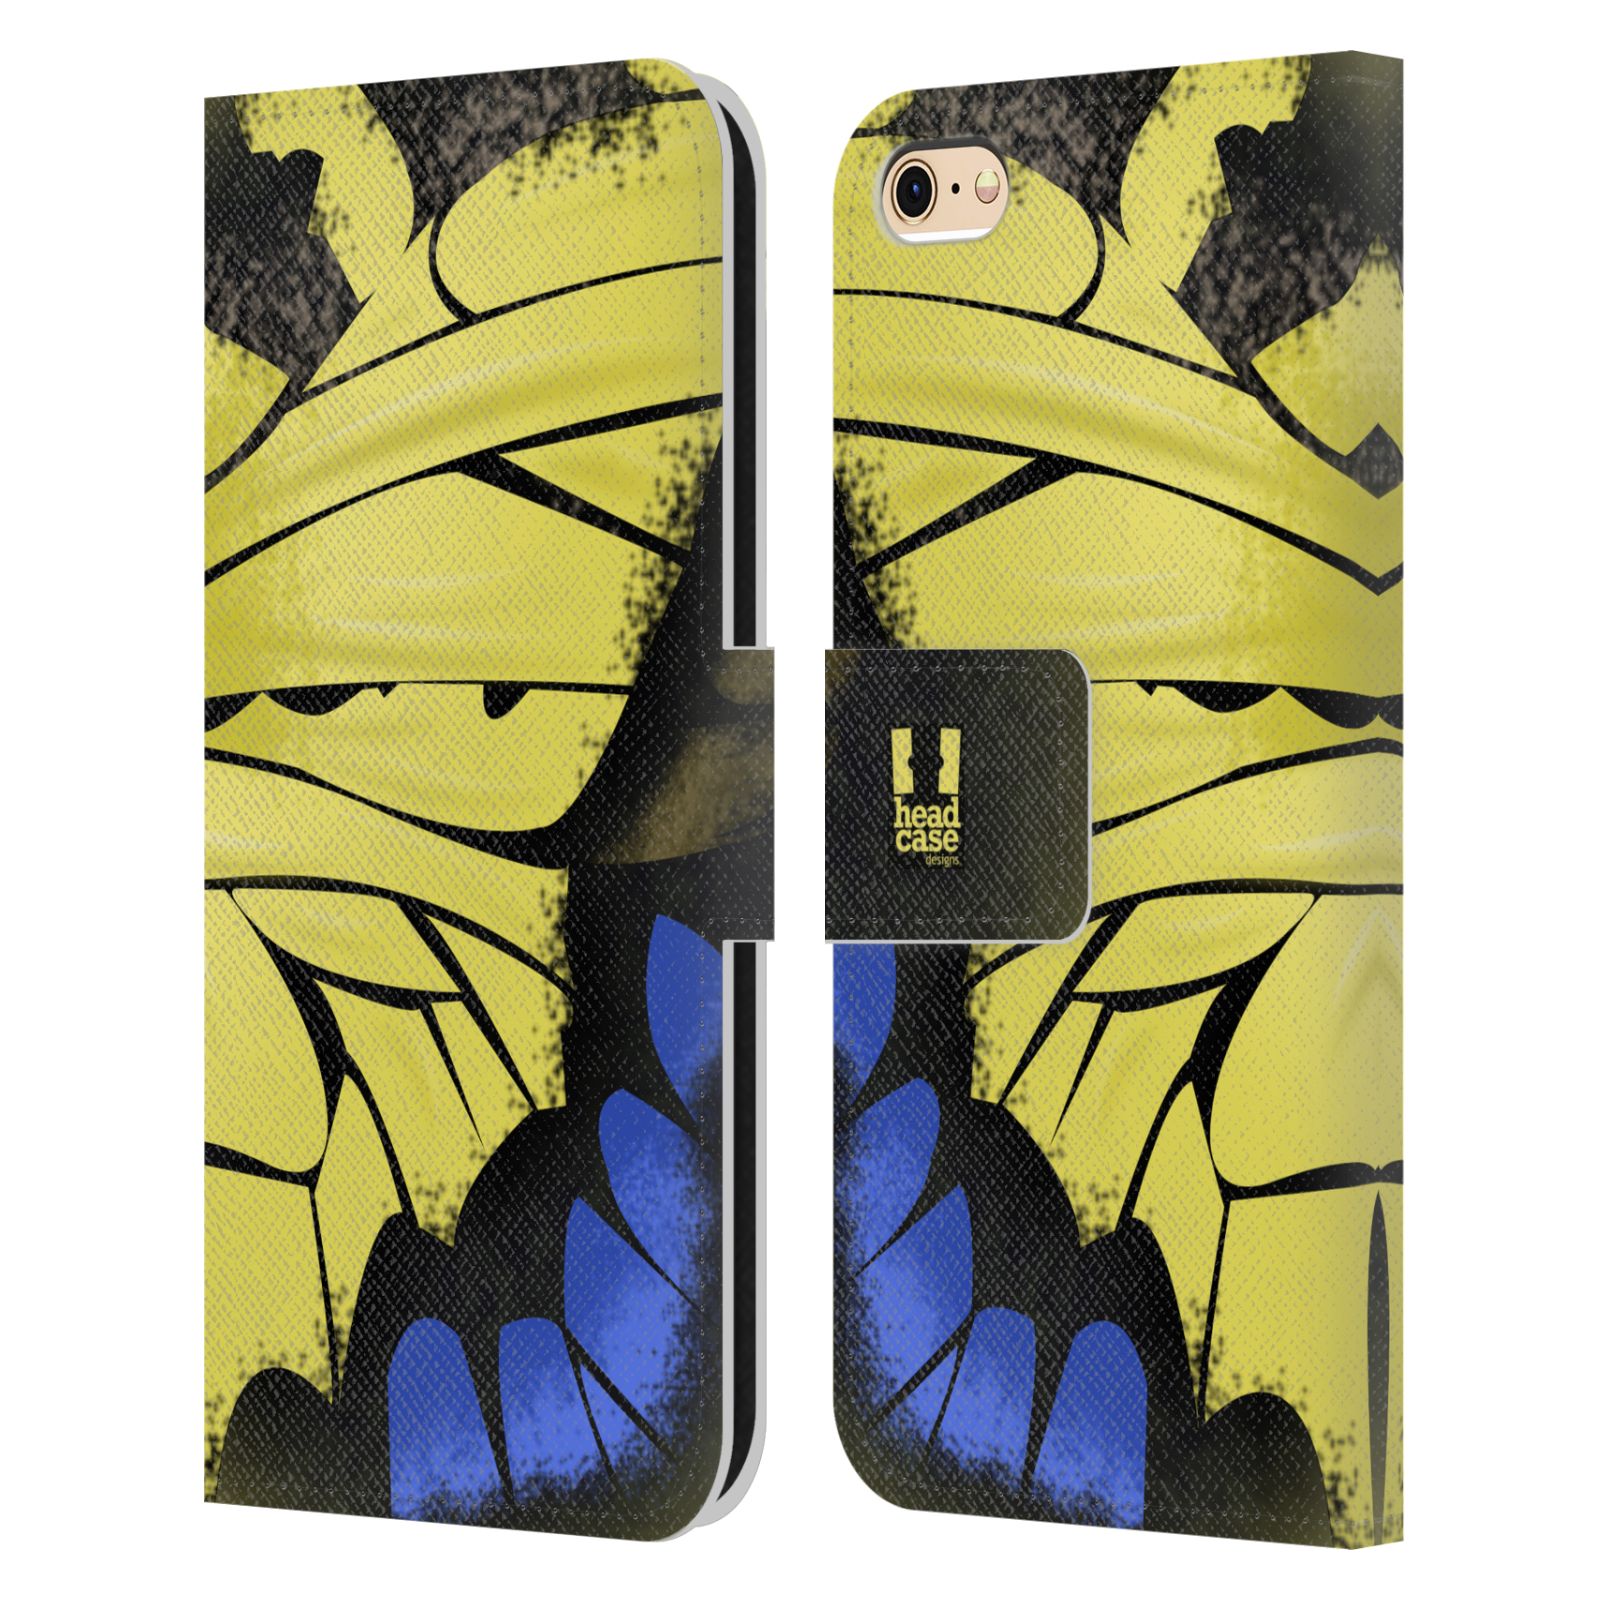 HEAD CASE Flipové pouzdro pro mobil Apple Iphone 6/6s motýl a křídla kreslený vzor žlutá a modrá